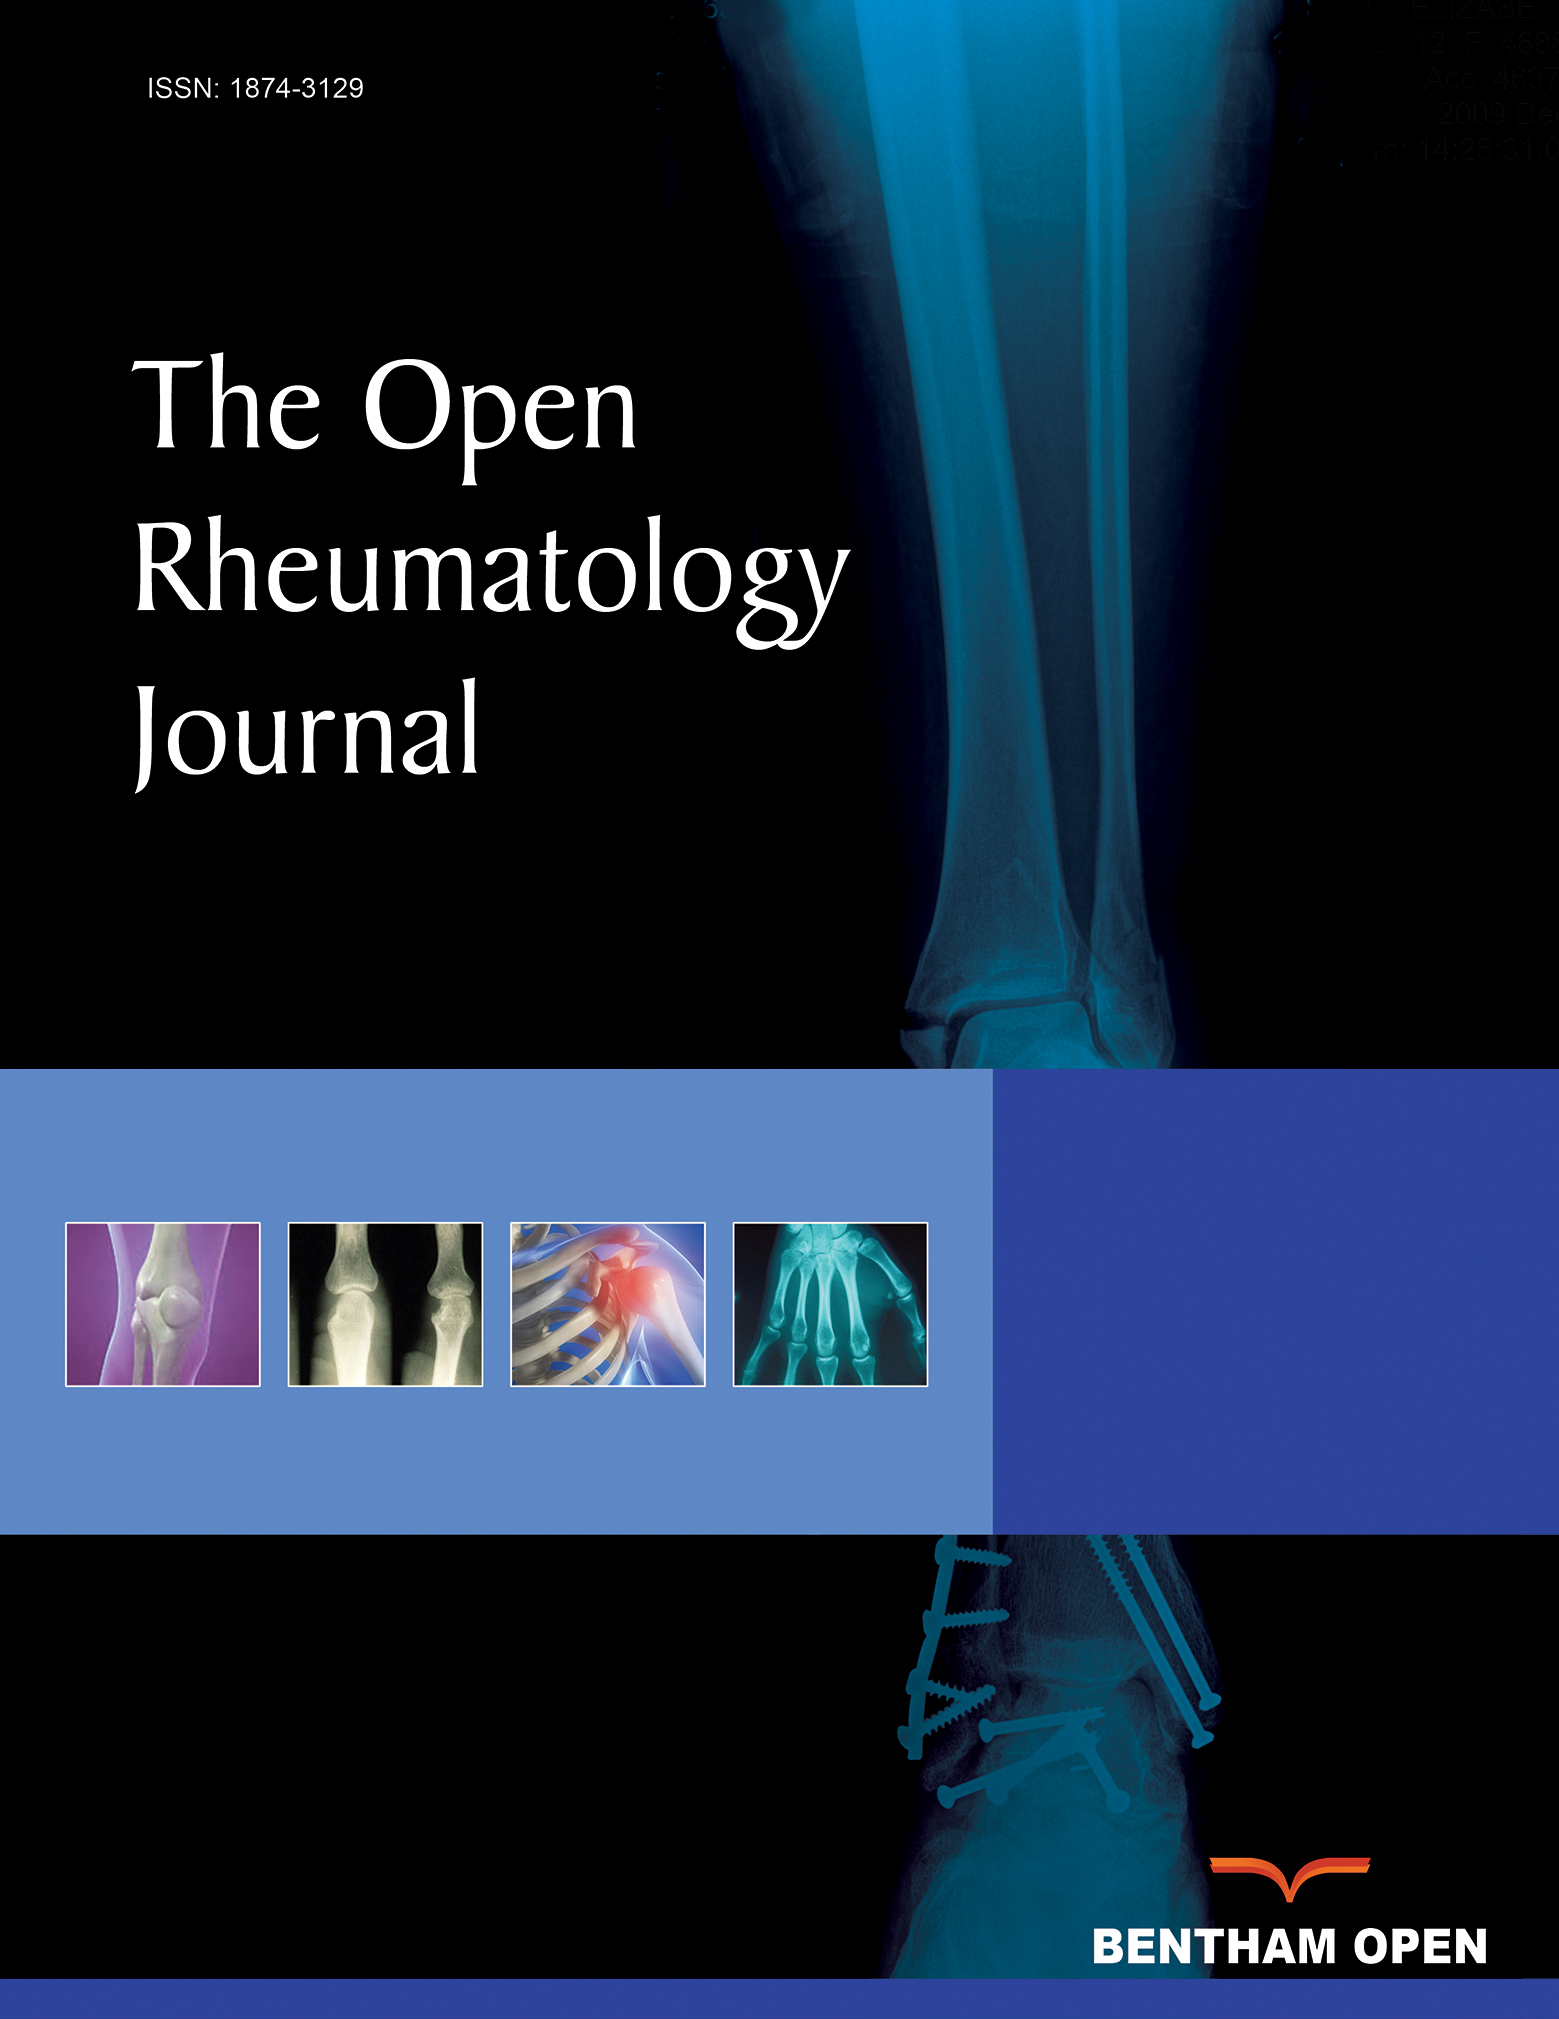 The Open Rheumatology Journal